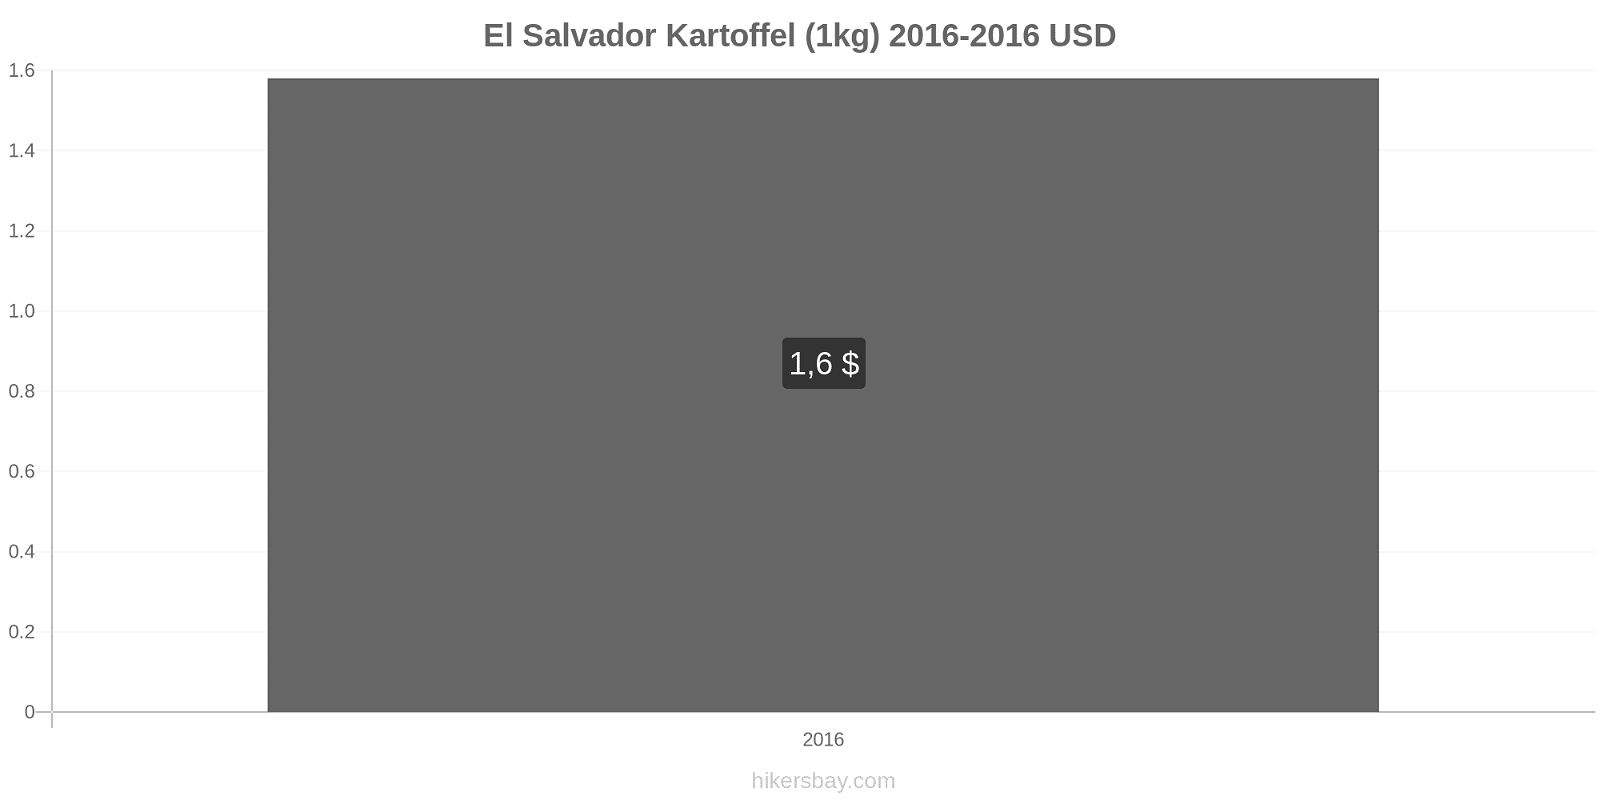 El Salvador Preisänderungen Kartoffeln (1kg) hikersbay.com